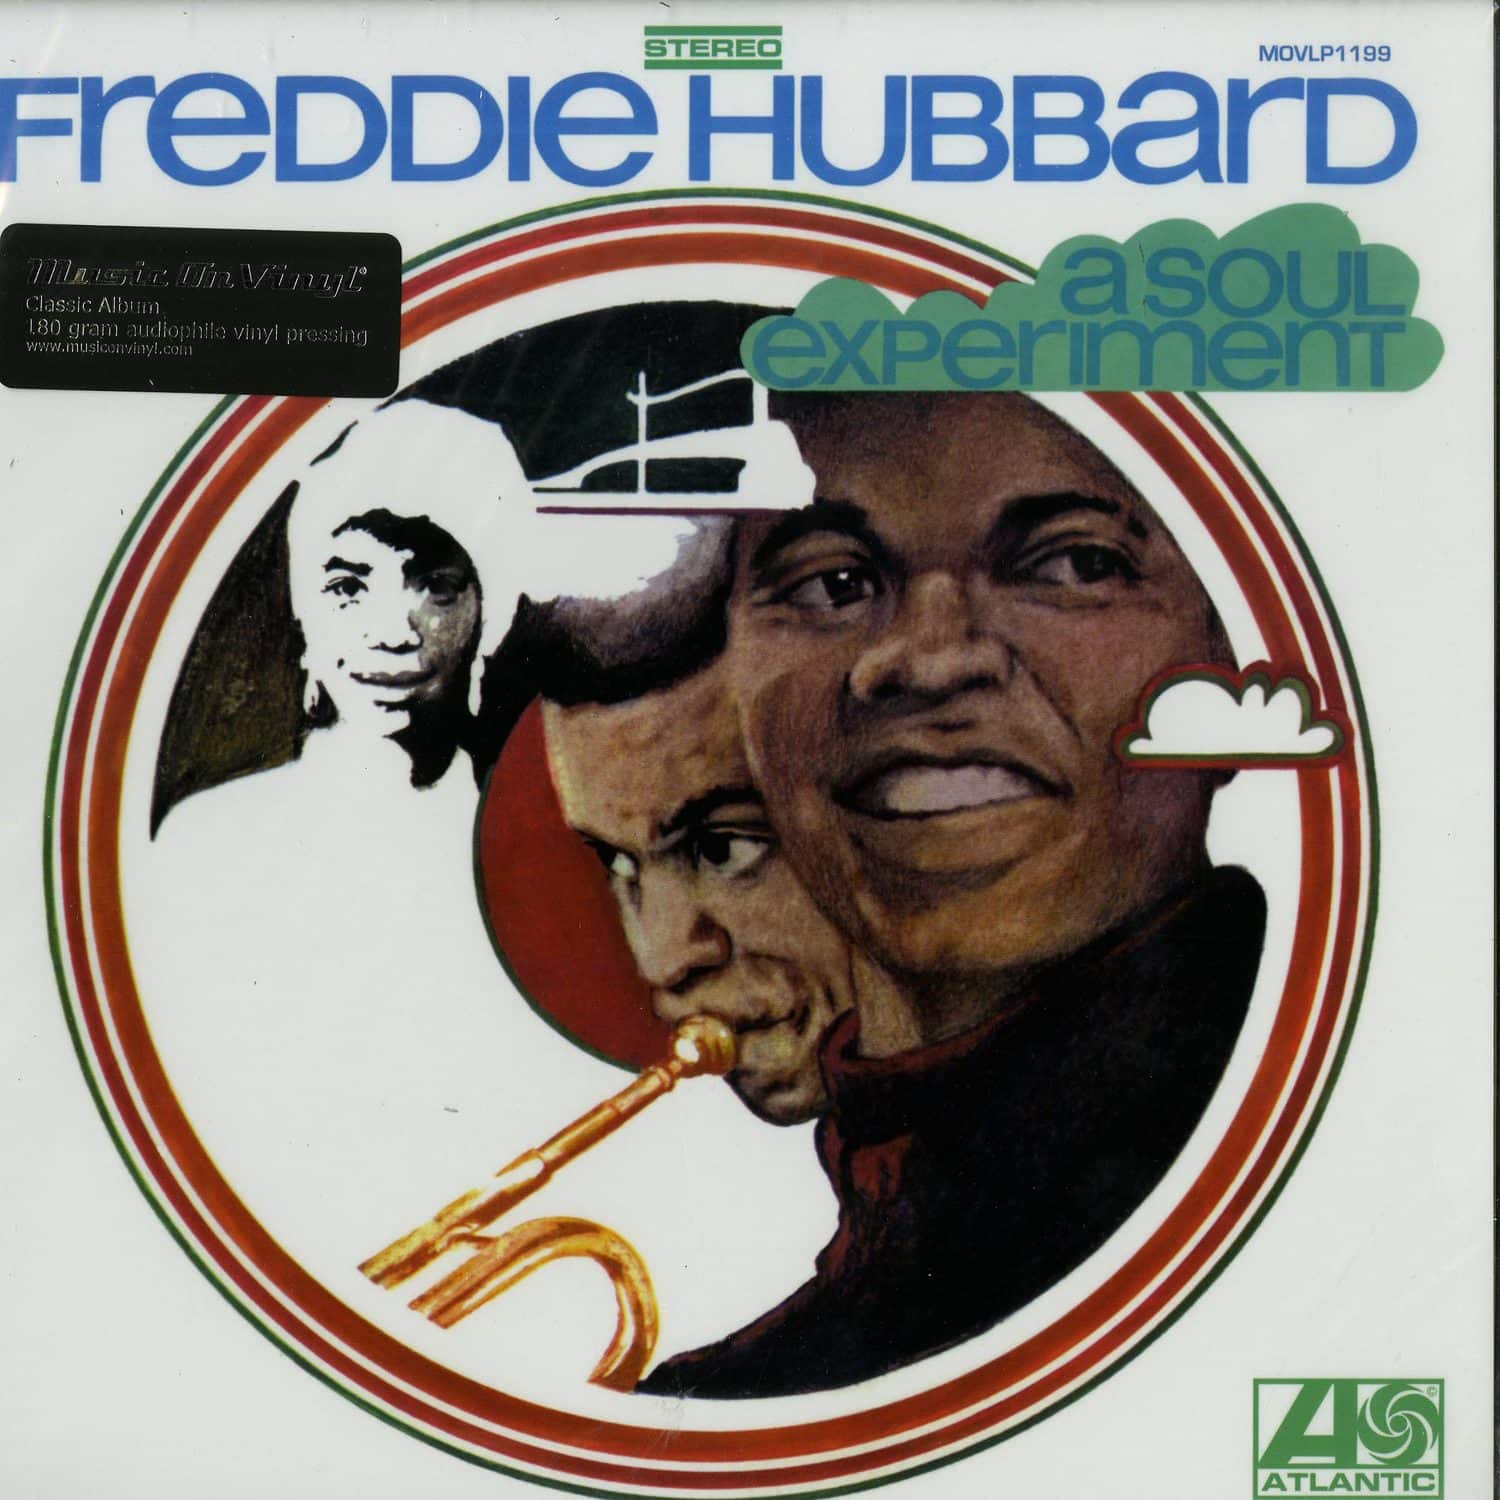 Freddie Hubbard - A SOUL EXPERIMENT 